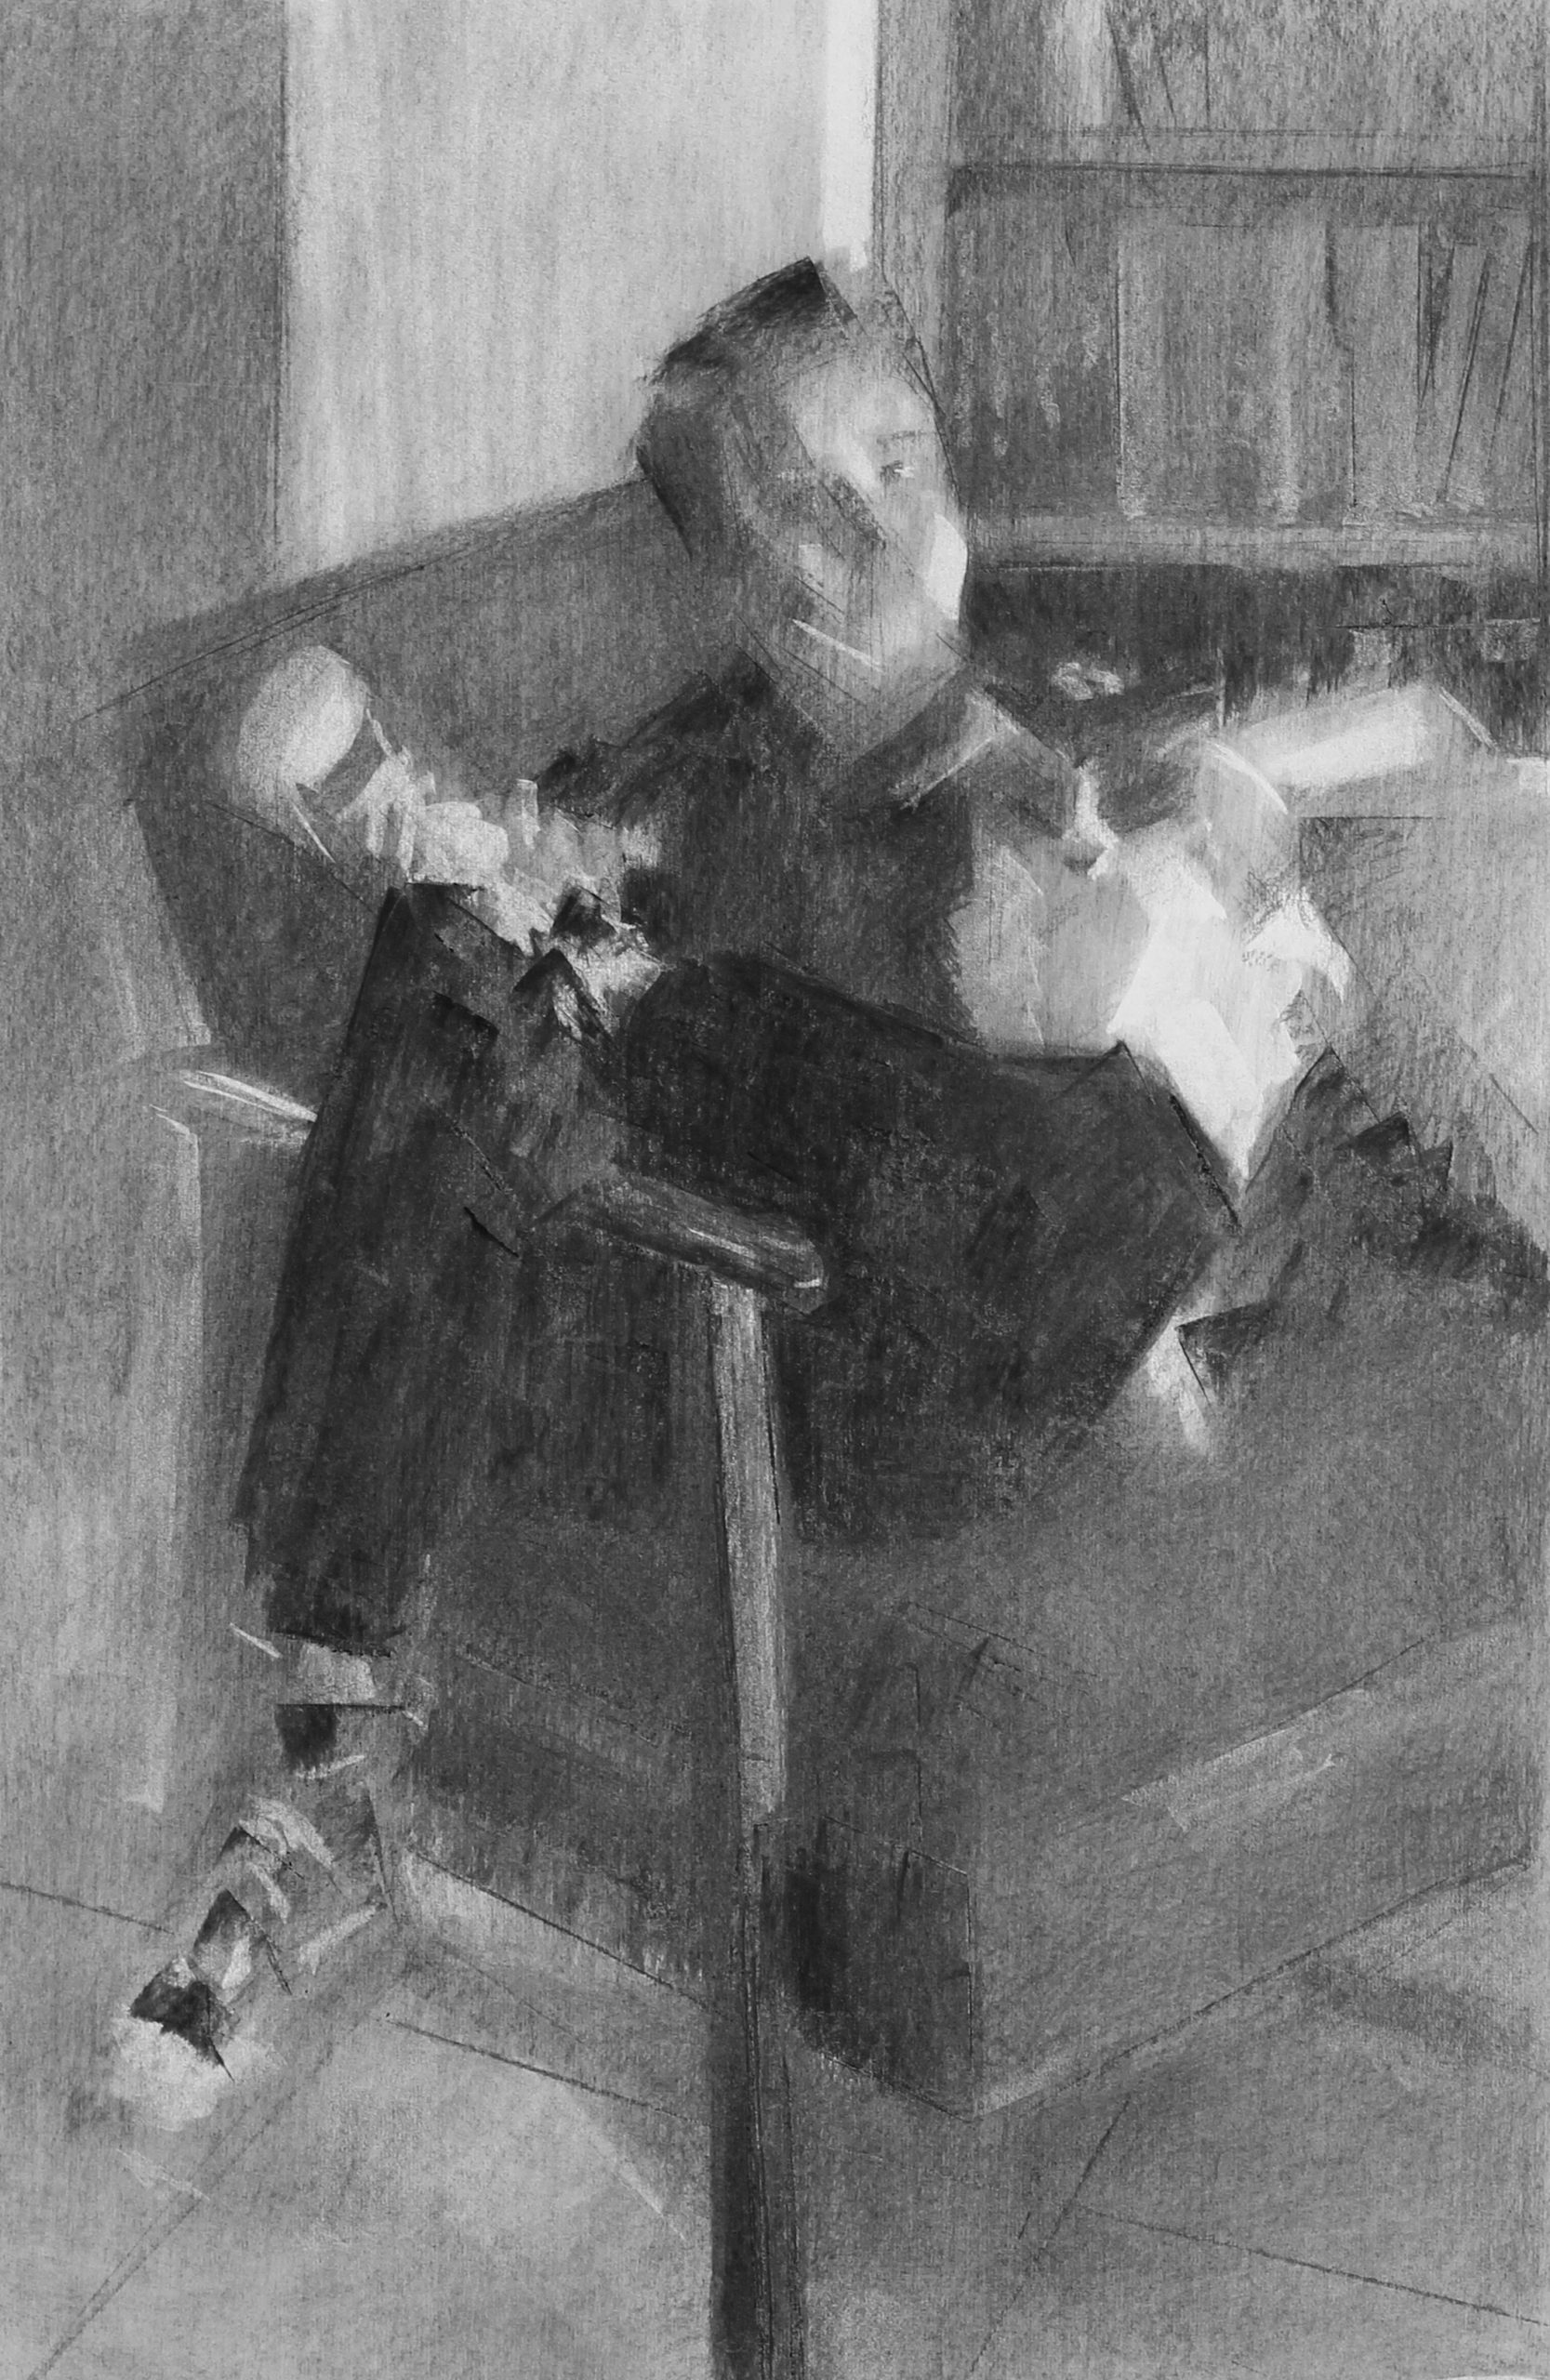 Tigist Yoseph Ron, Itay
2022, Charcoal on paper, 39 x 58 cm